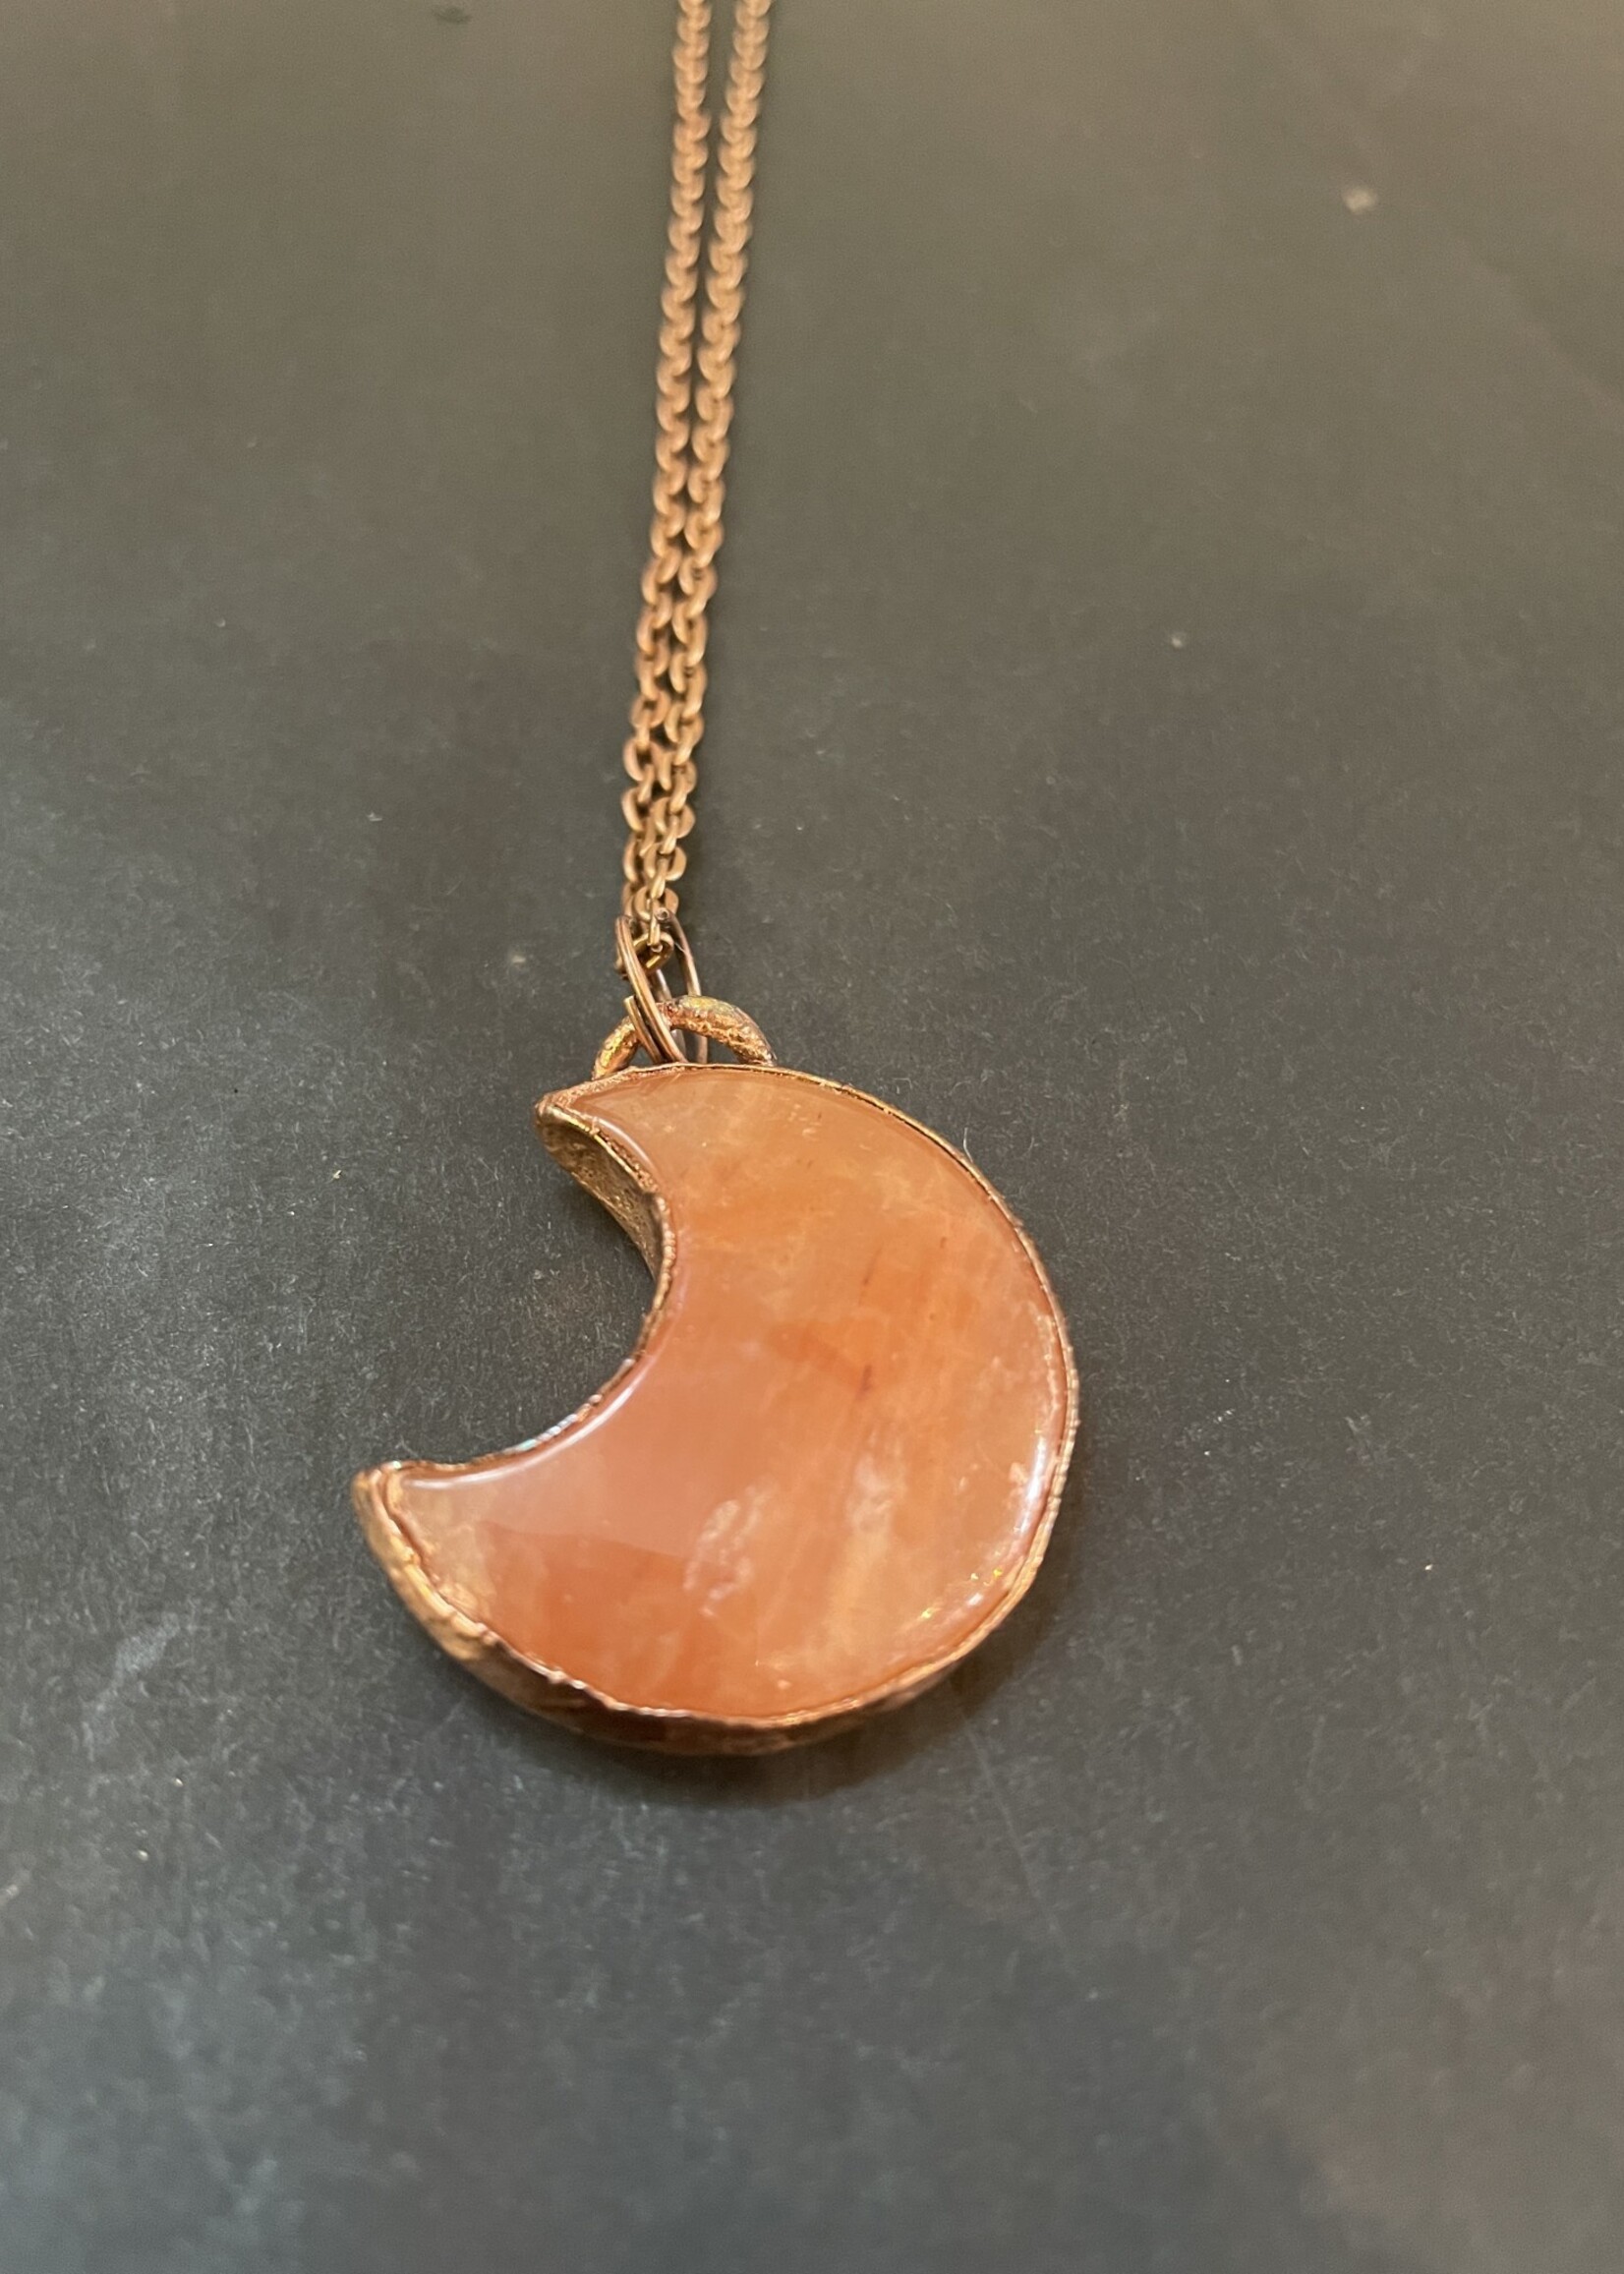 Gail Scherer Copper Moon Necklace with Strawberry Quartz